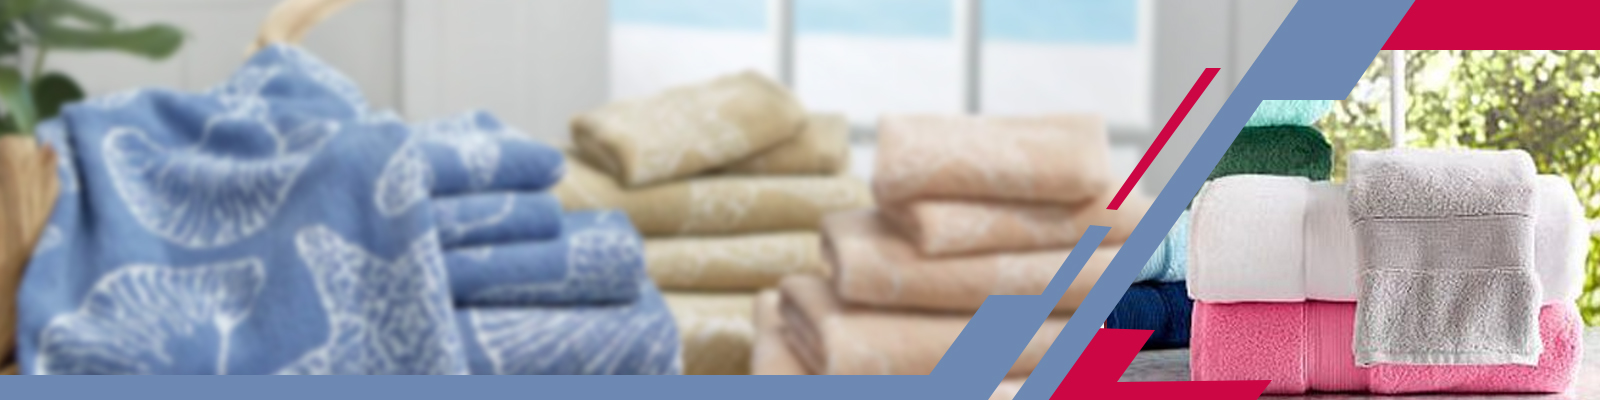 Bar Towels  Venus Group - Global Textiles Manufacturer and Distributor